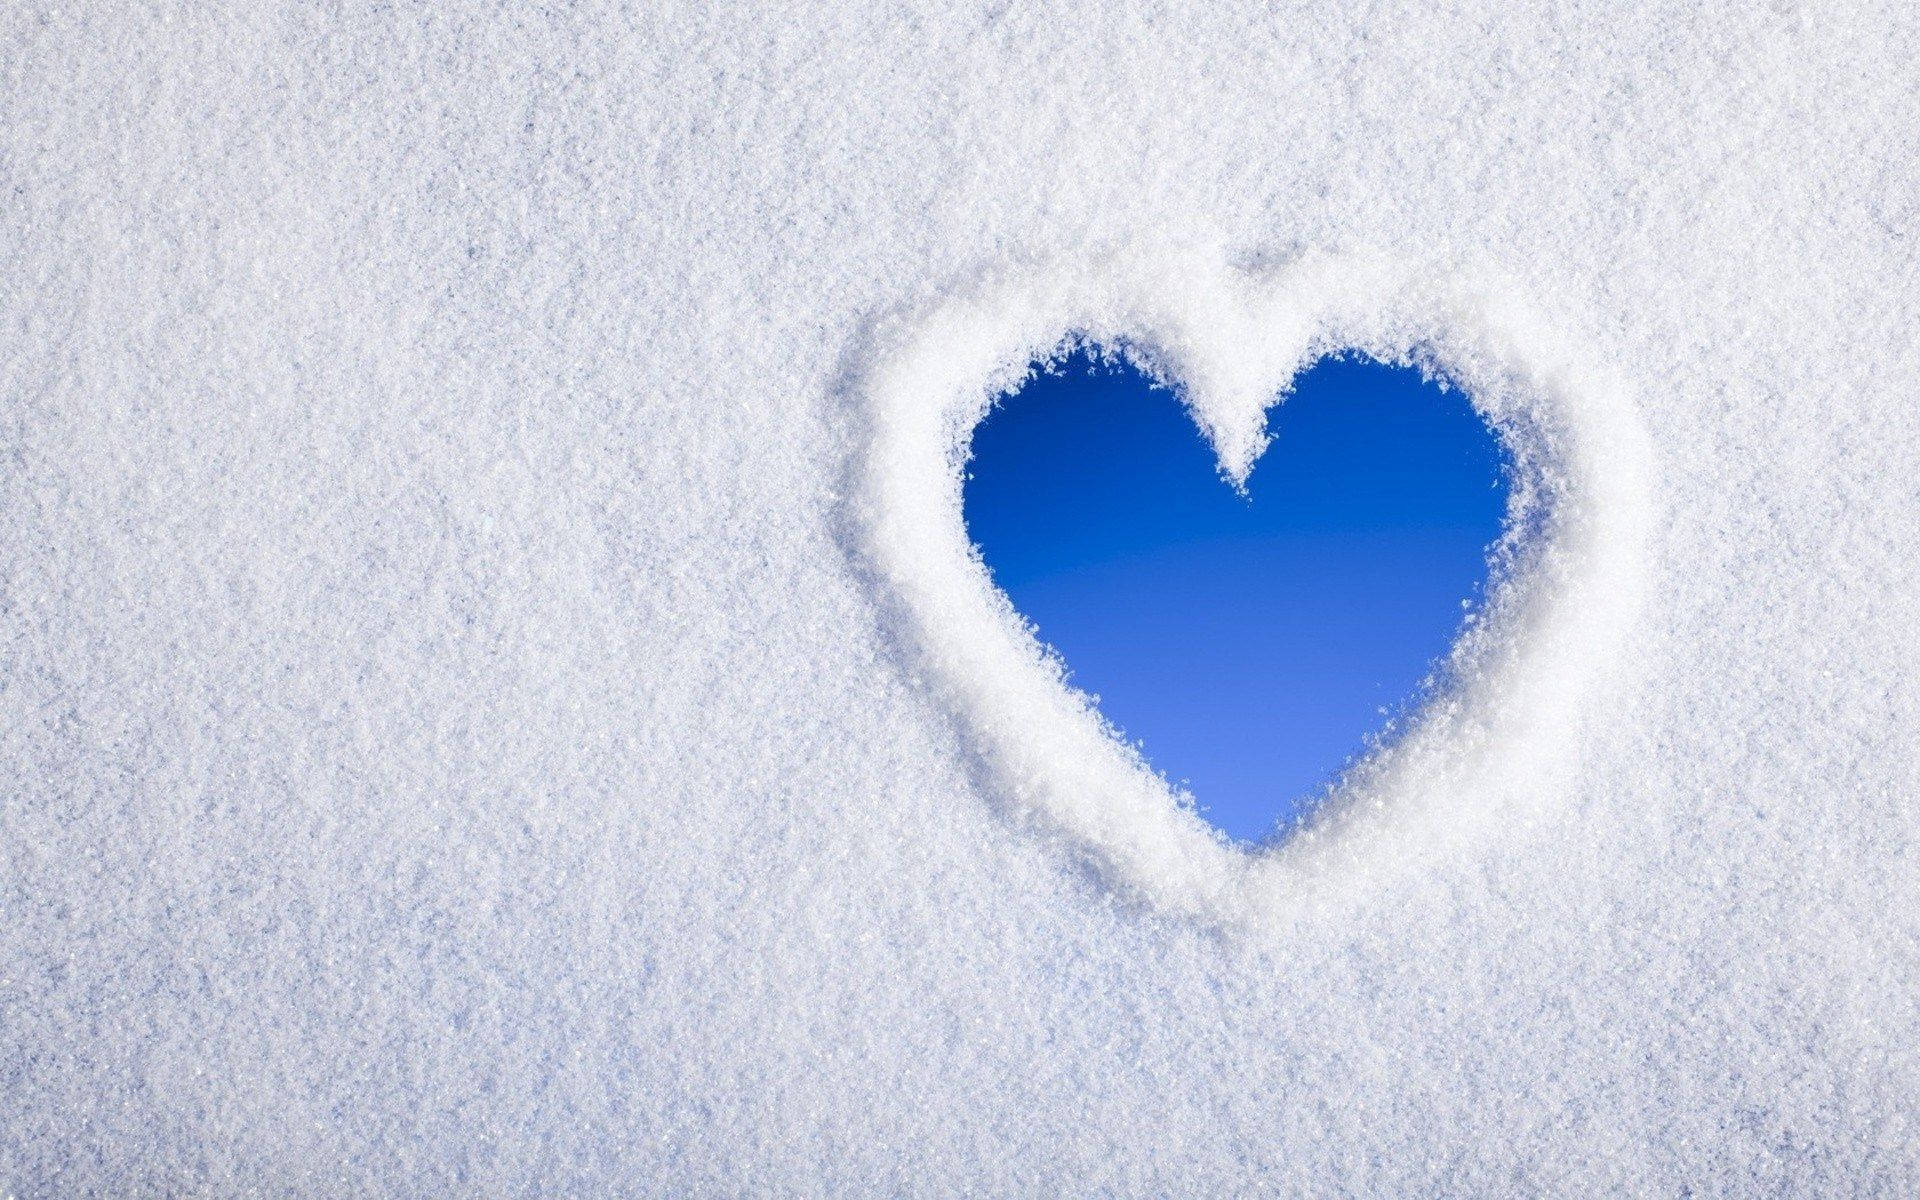 Blue Heart In White Snow